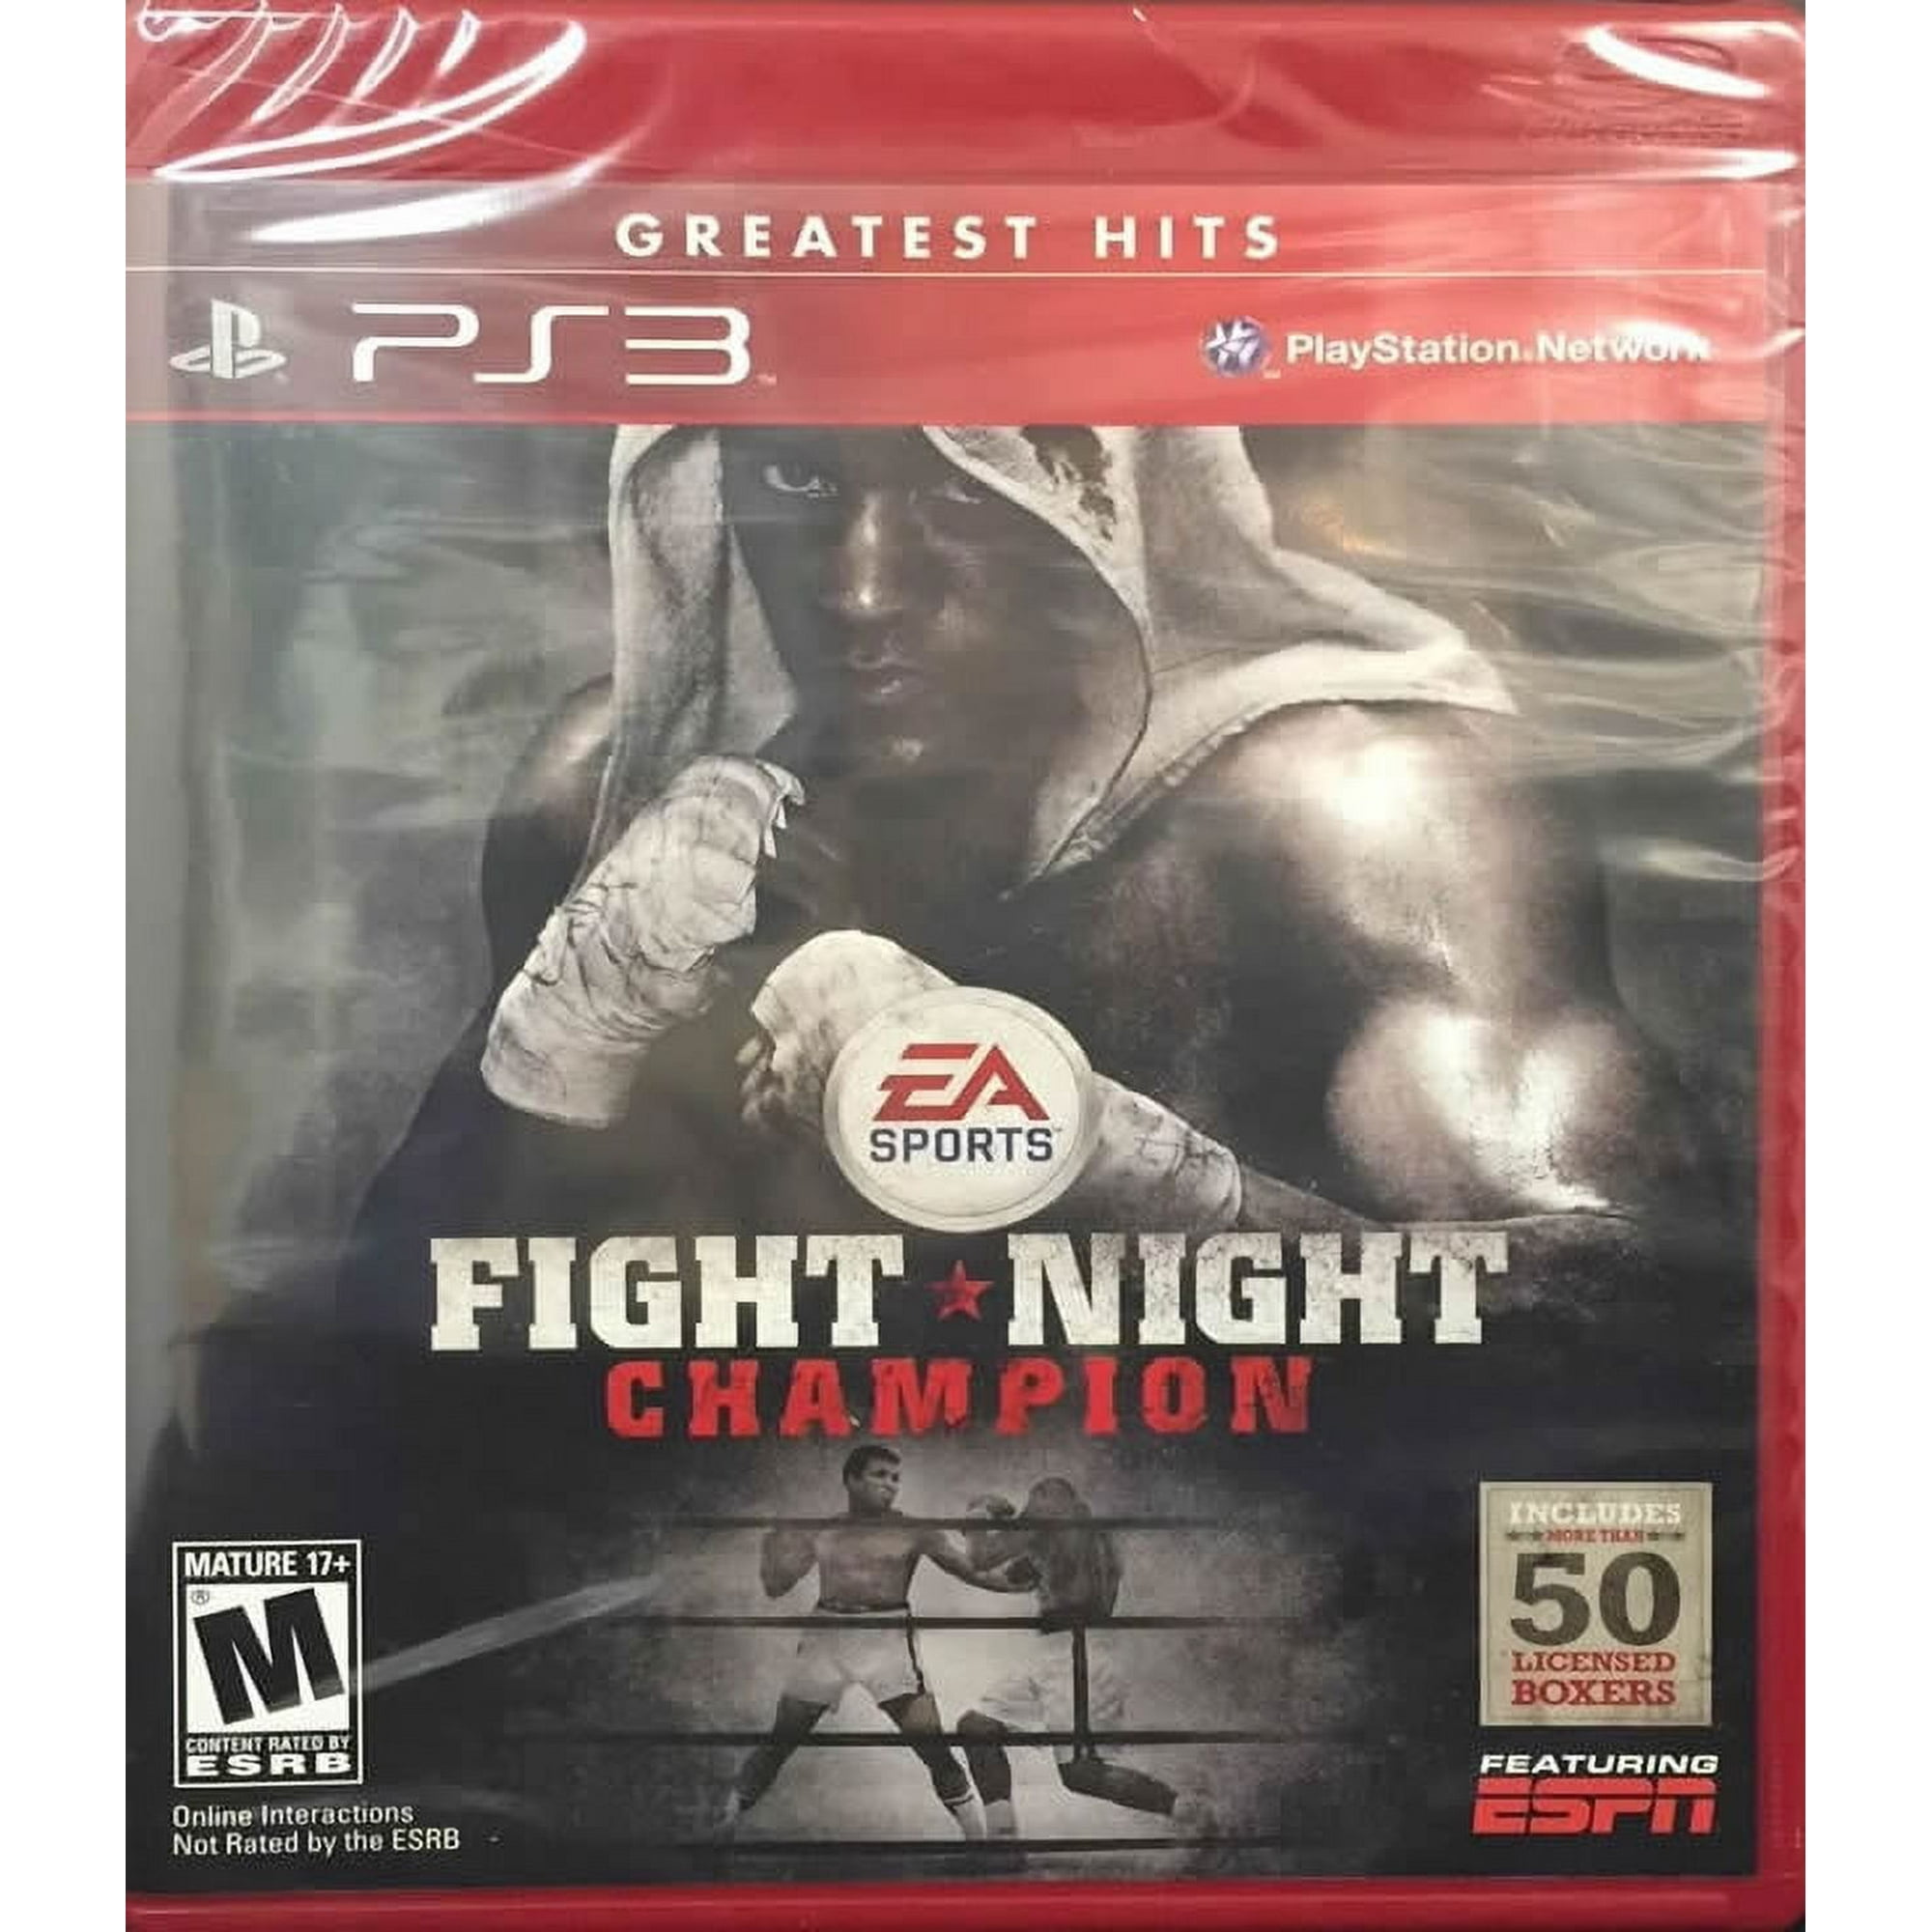 Ps3 boxing. Файт Найт бокс на ПС 4. Fight Night Champion [ps3, английская версия]. Fight Night Champion Xbox 360. Файт Найт бокс ПС 3.